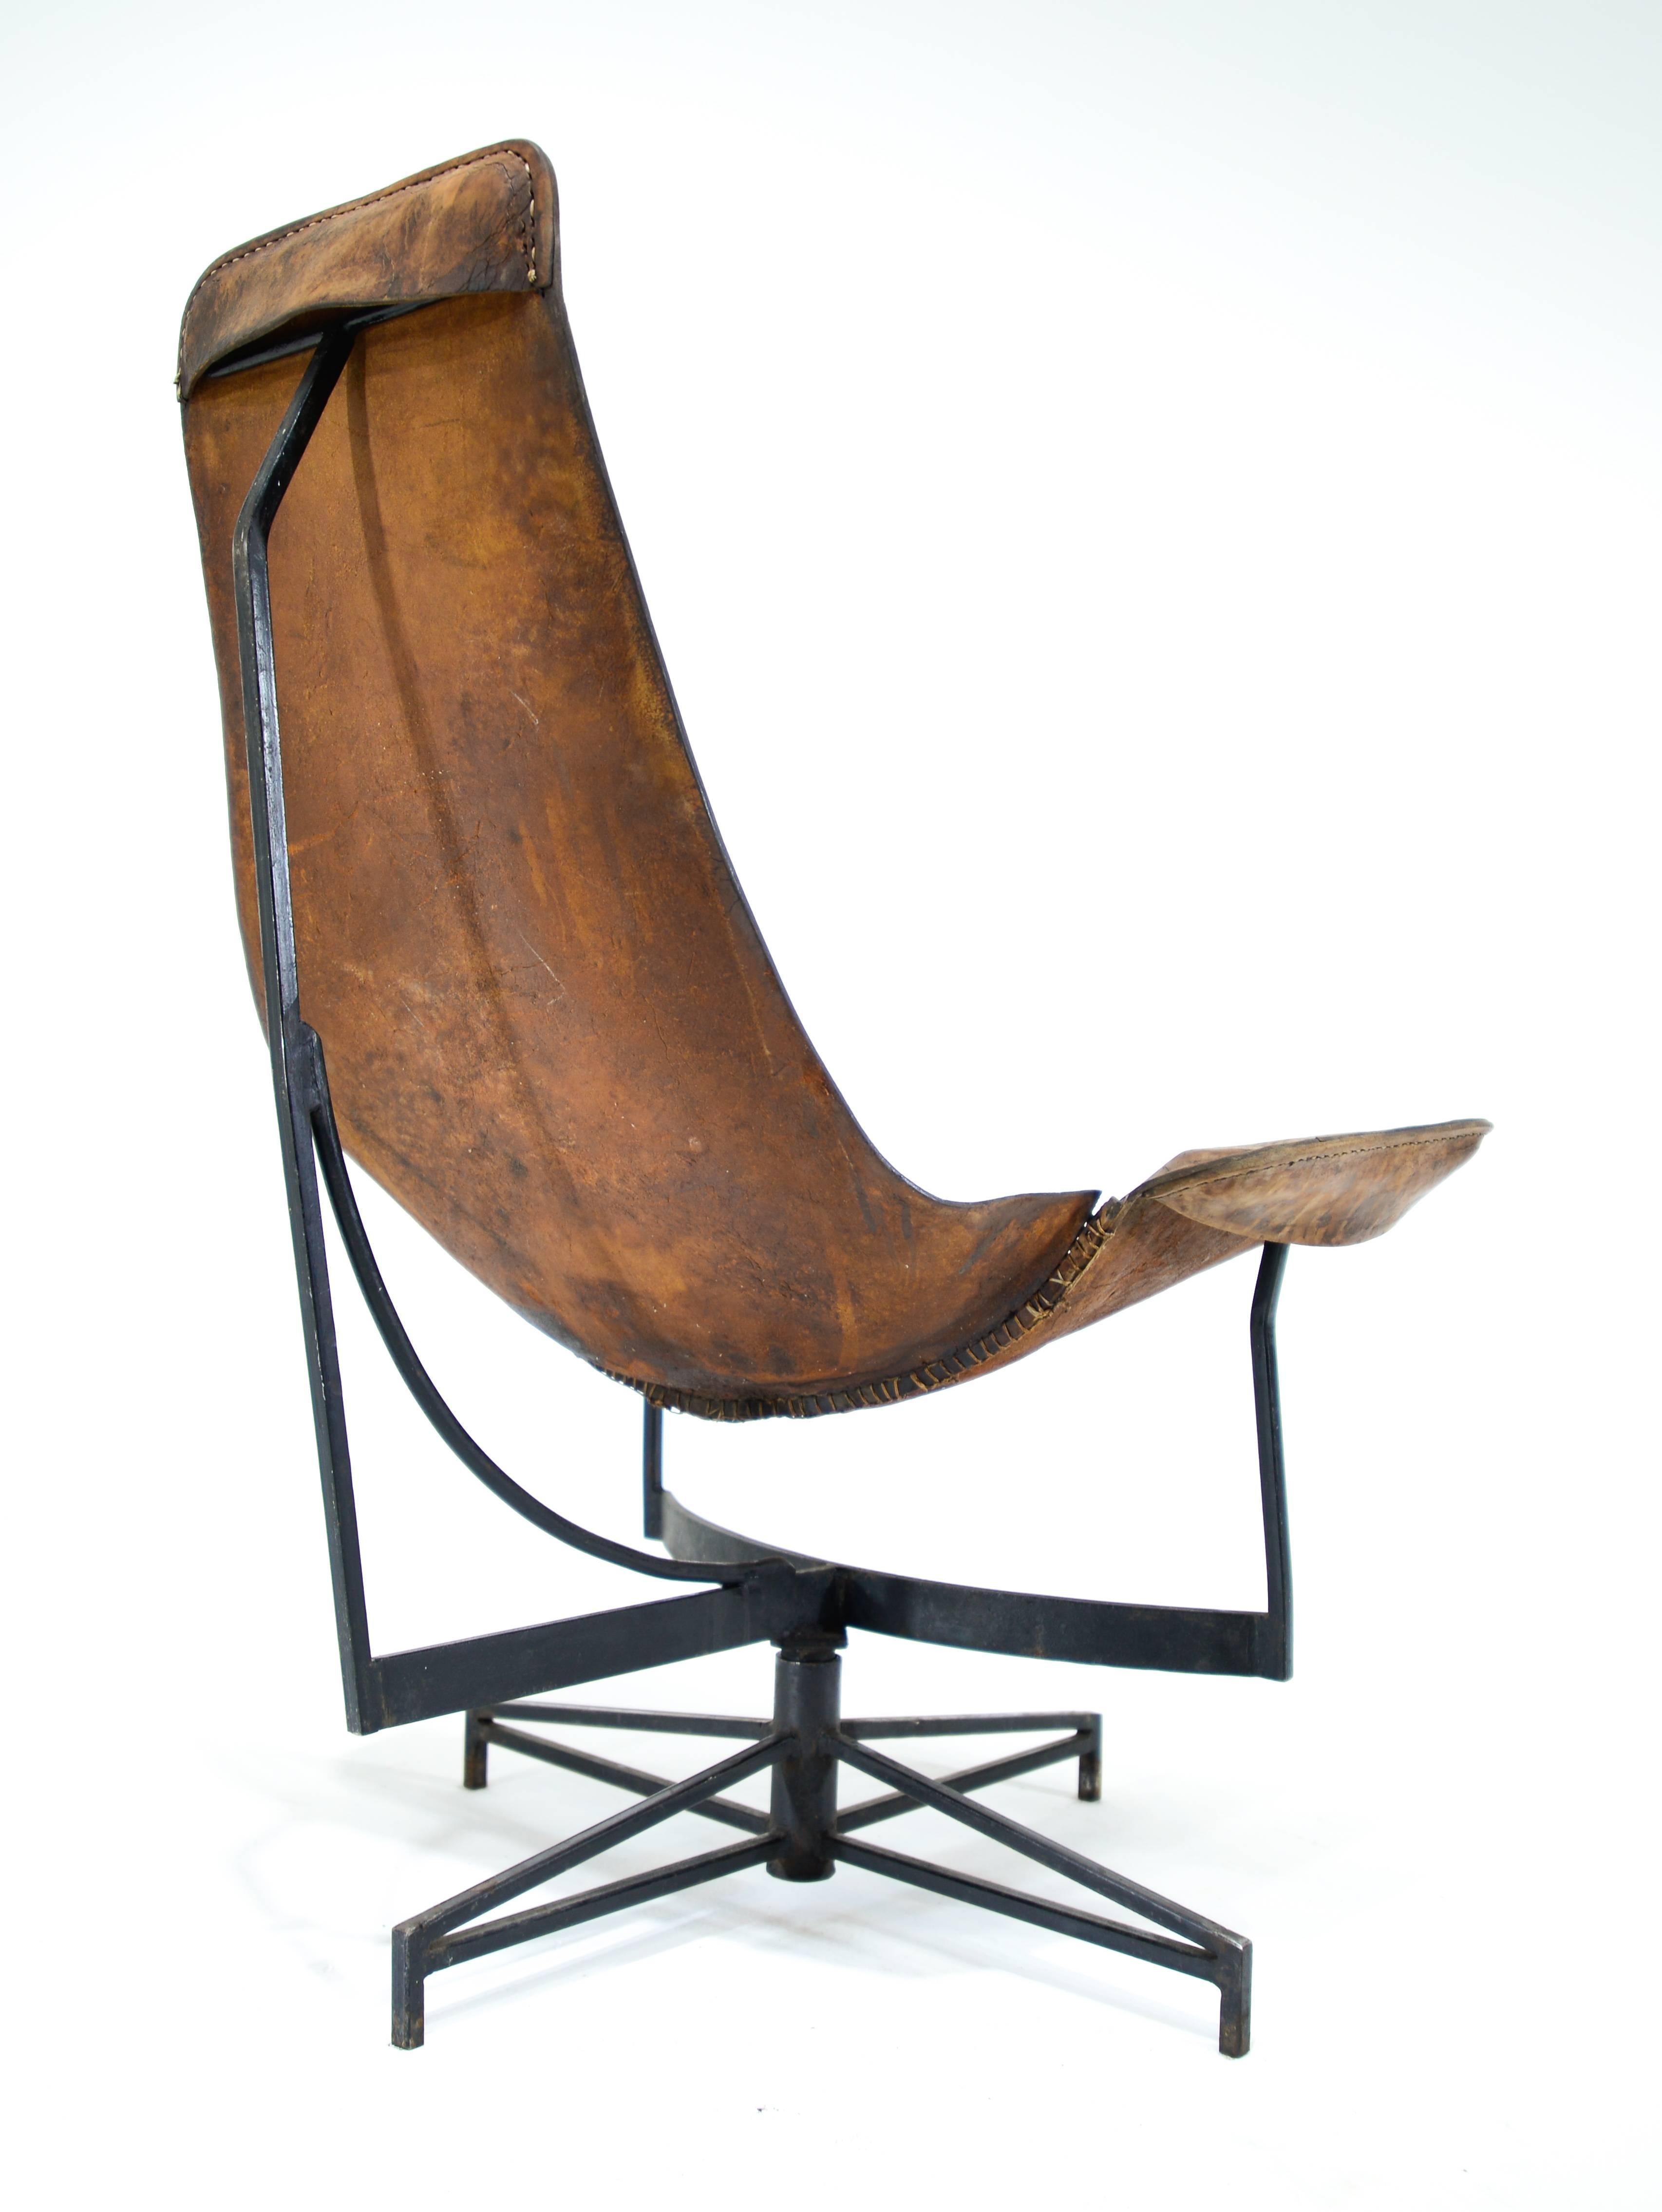 Mid-20th Century William Katavolos Swiveling Leather Sling Chair